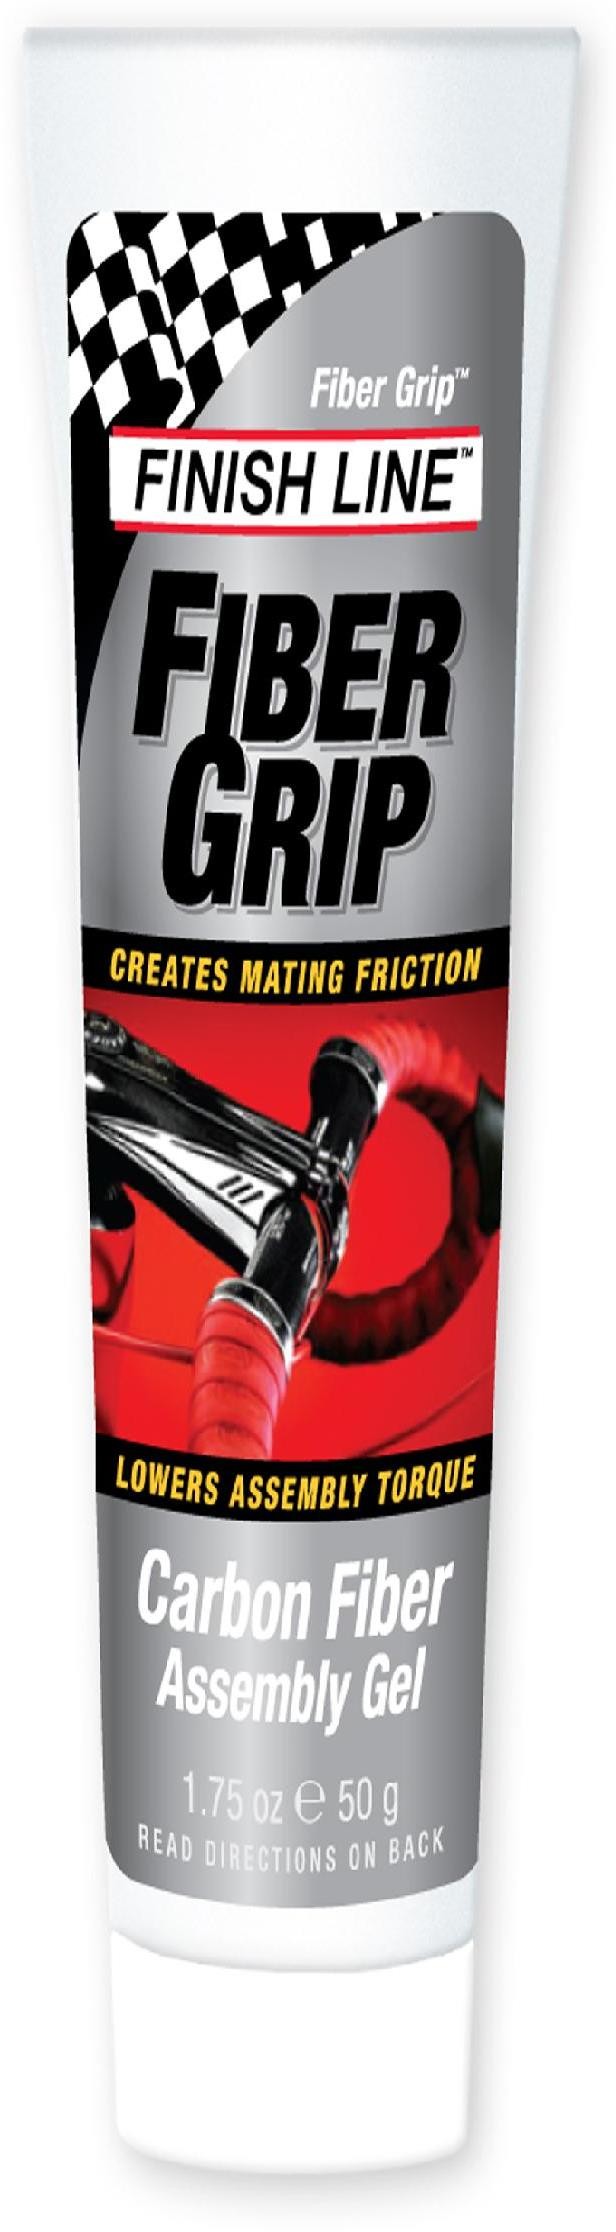 Fiber Grip Carbon Fibre Assembly Gel image 0